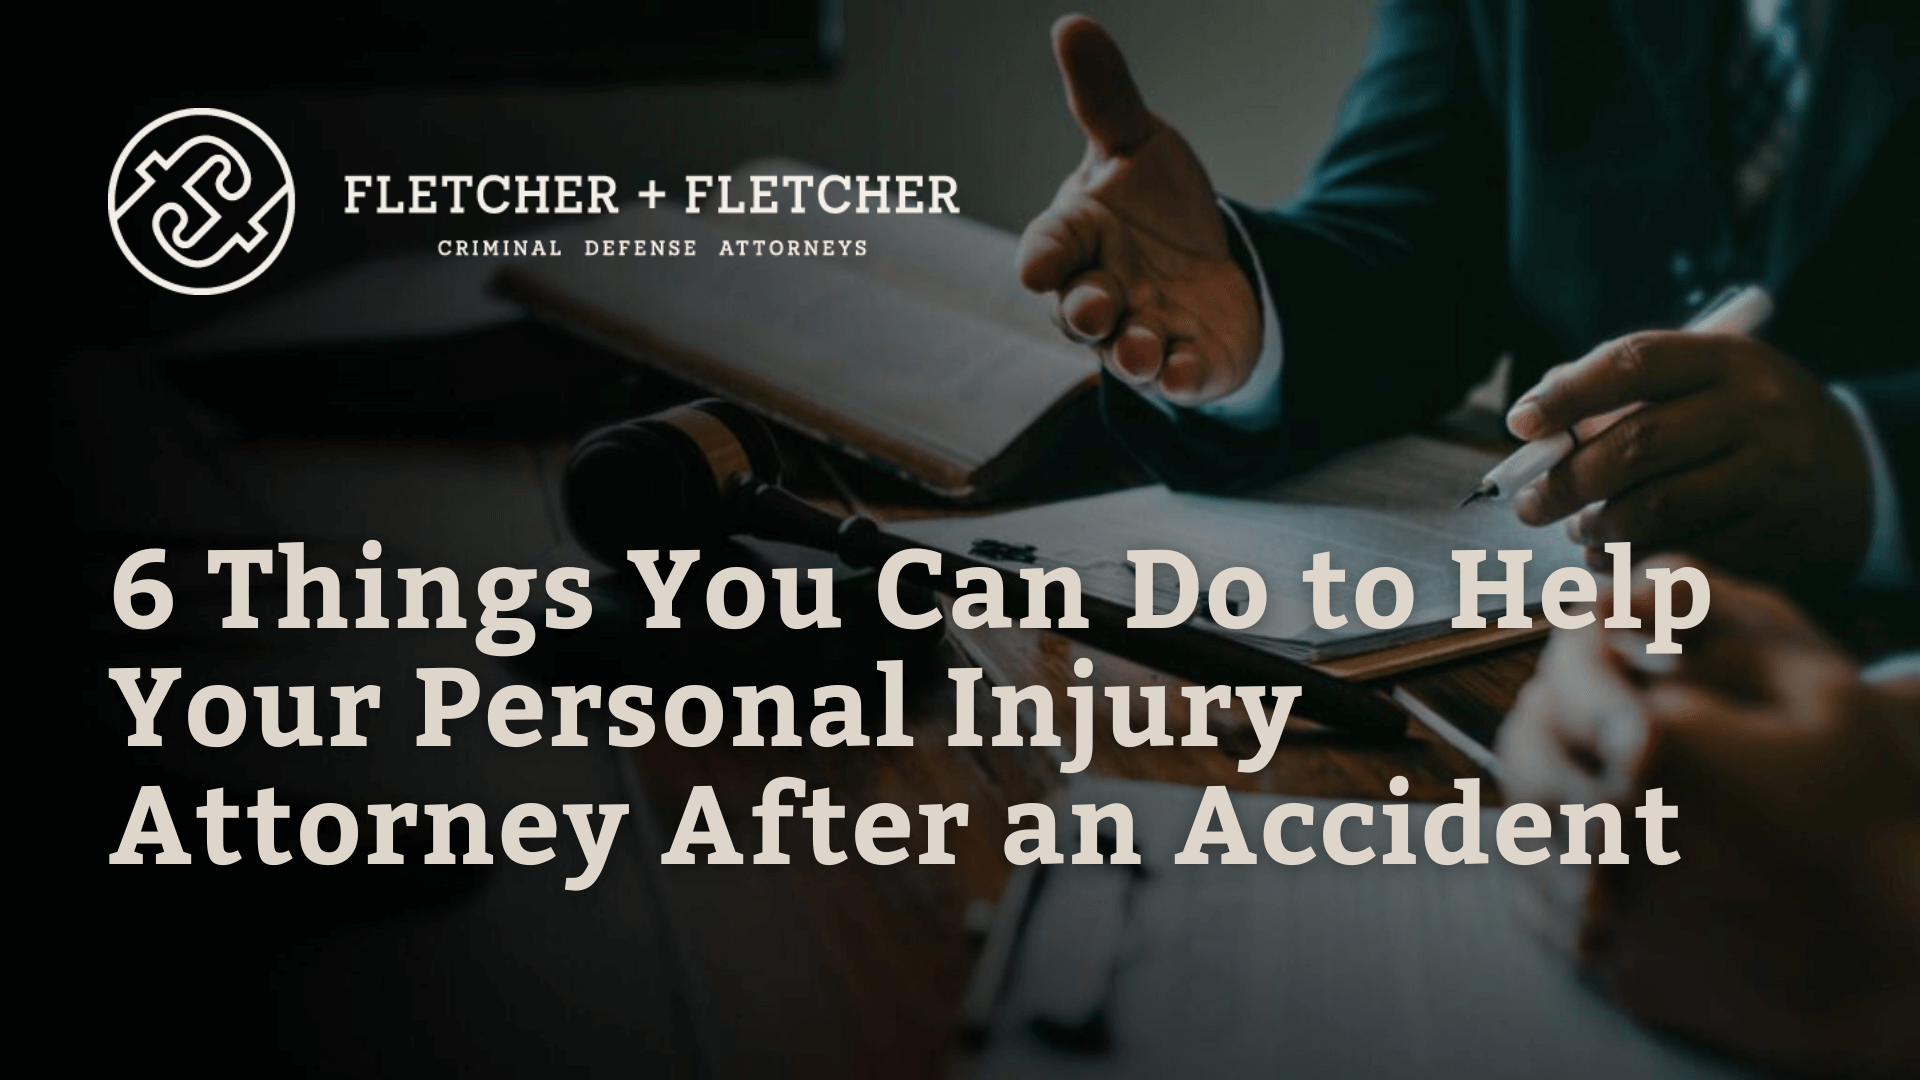 florida Personal Injury Attorney After an Accident - Fletcher Fletcher Florida criminal defense lawyers